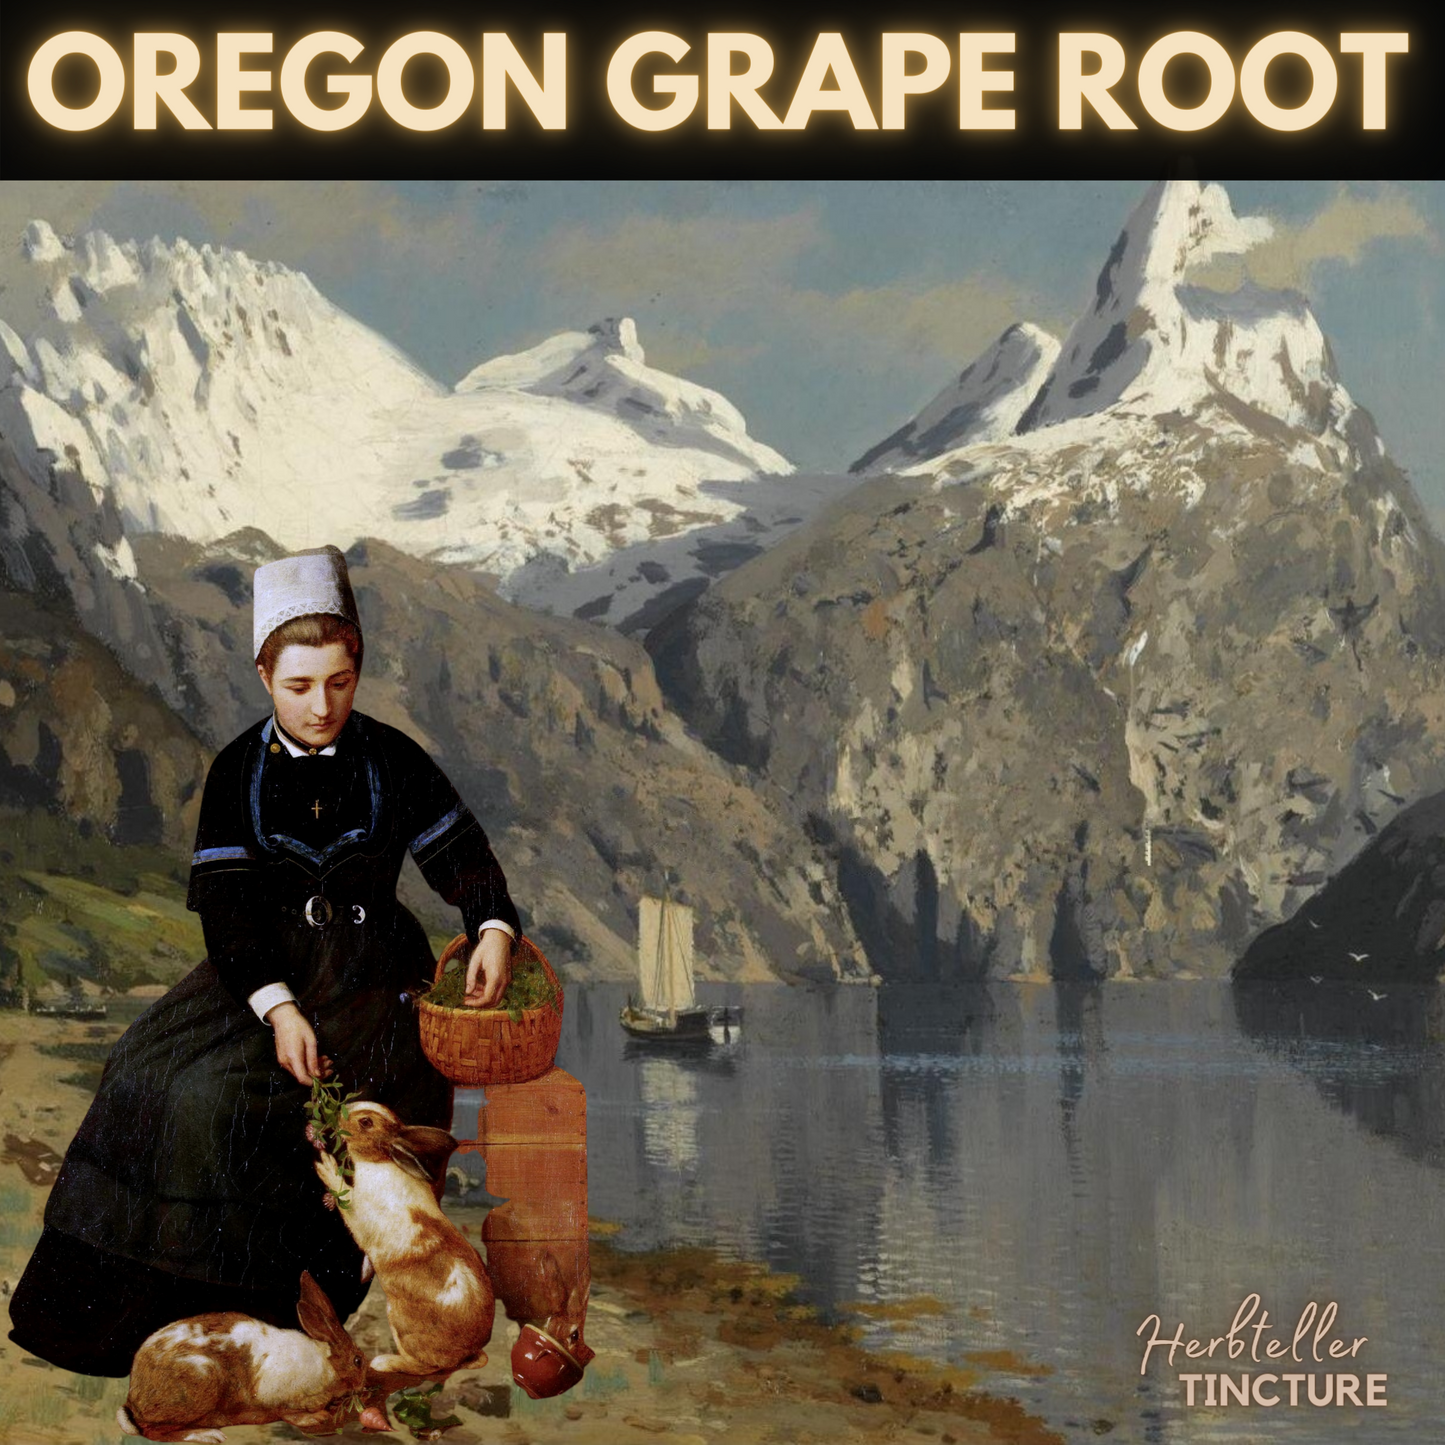 Oregon Grape Root Herbal Tincture